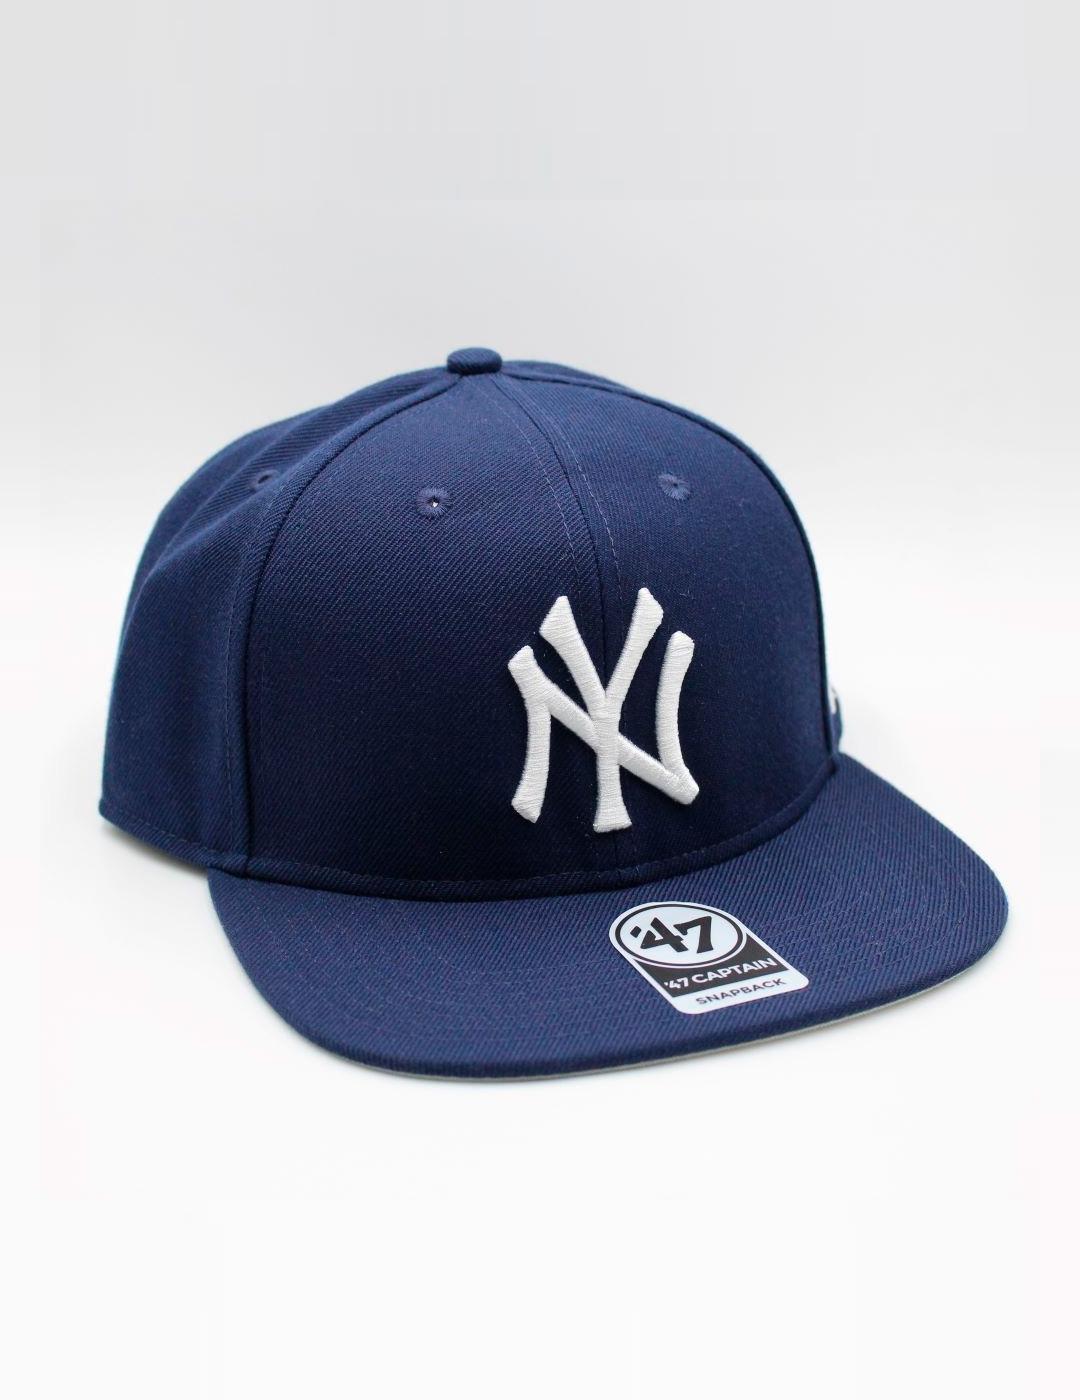 Gorra 47 Brand 'New York Yankees' Pala Plana Azul